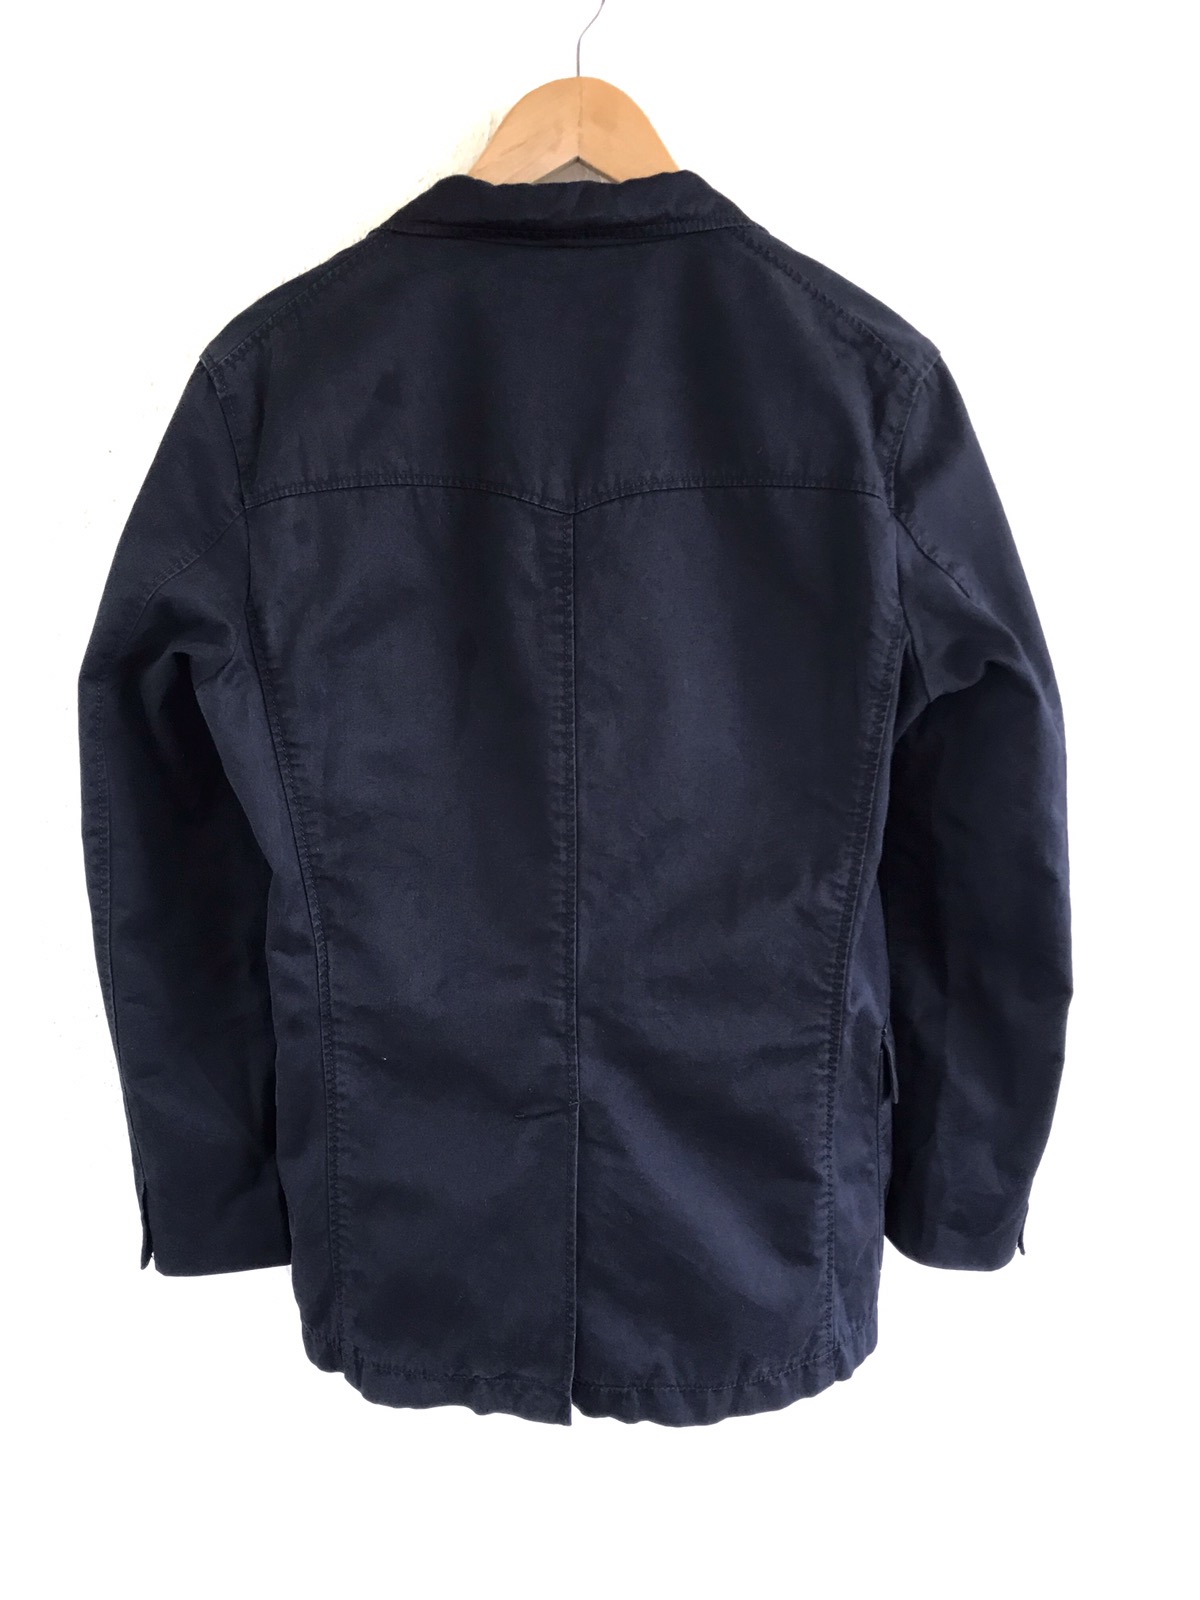 Jil Sander Black Jacket Blazer Made in Italy - 5